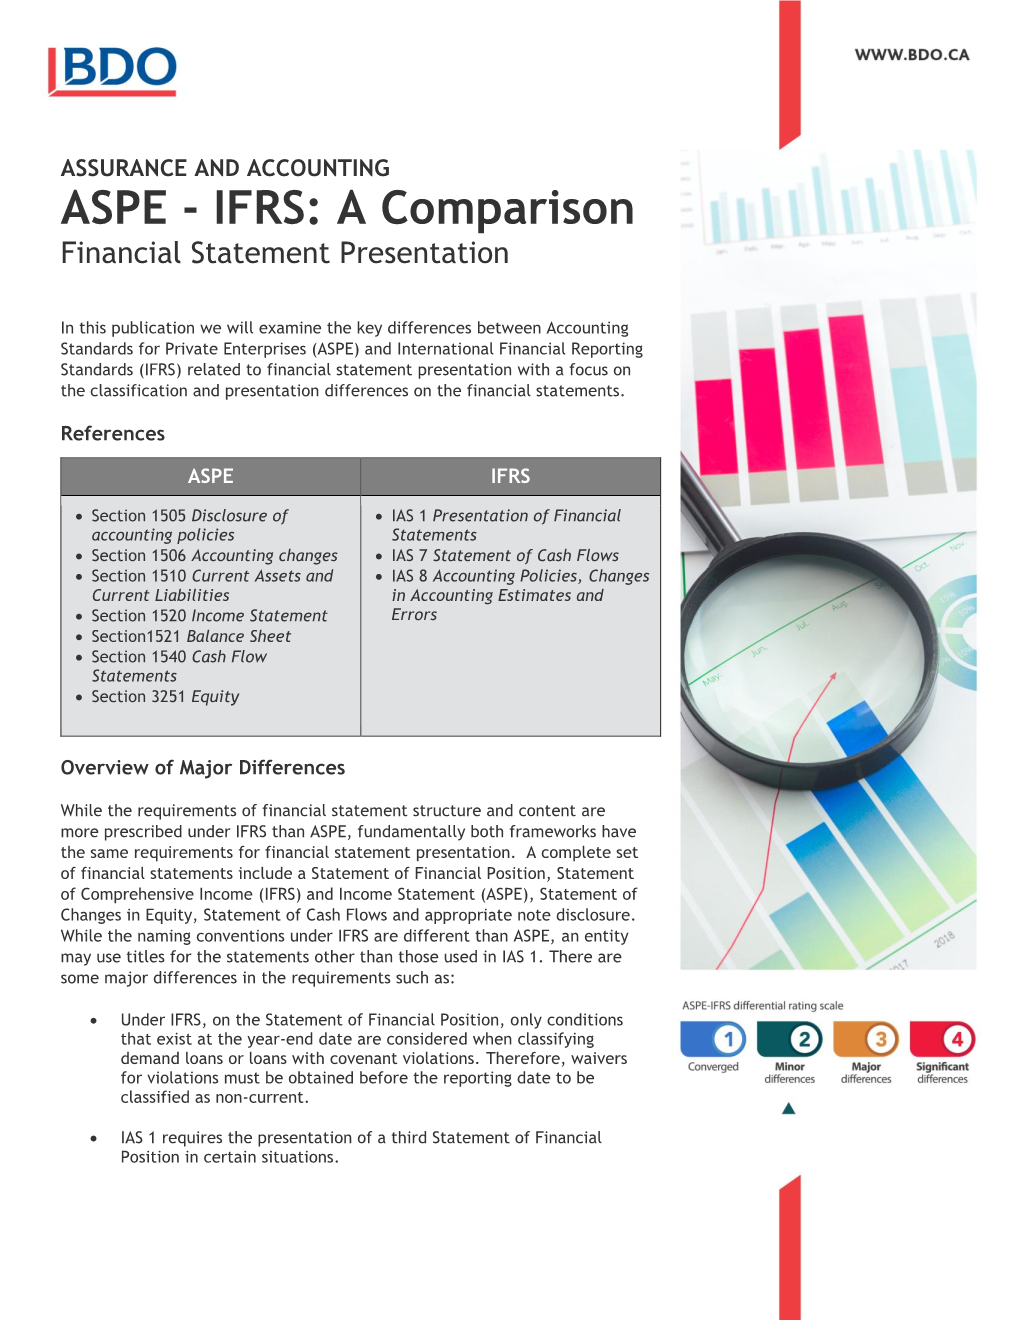 ASPE - IFRS: a Comparison Financial Statement Presentation